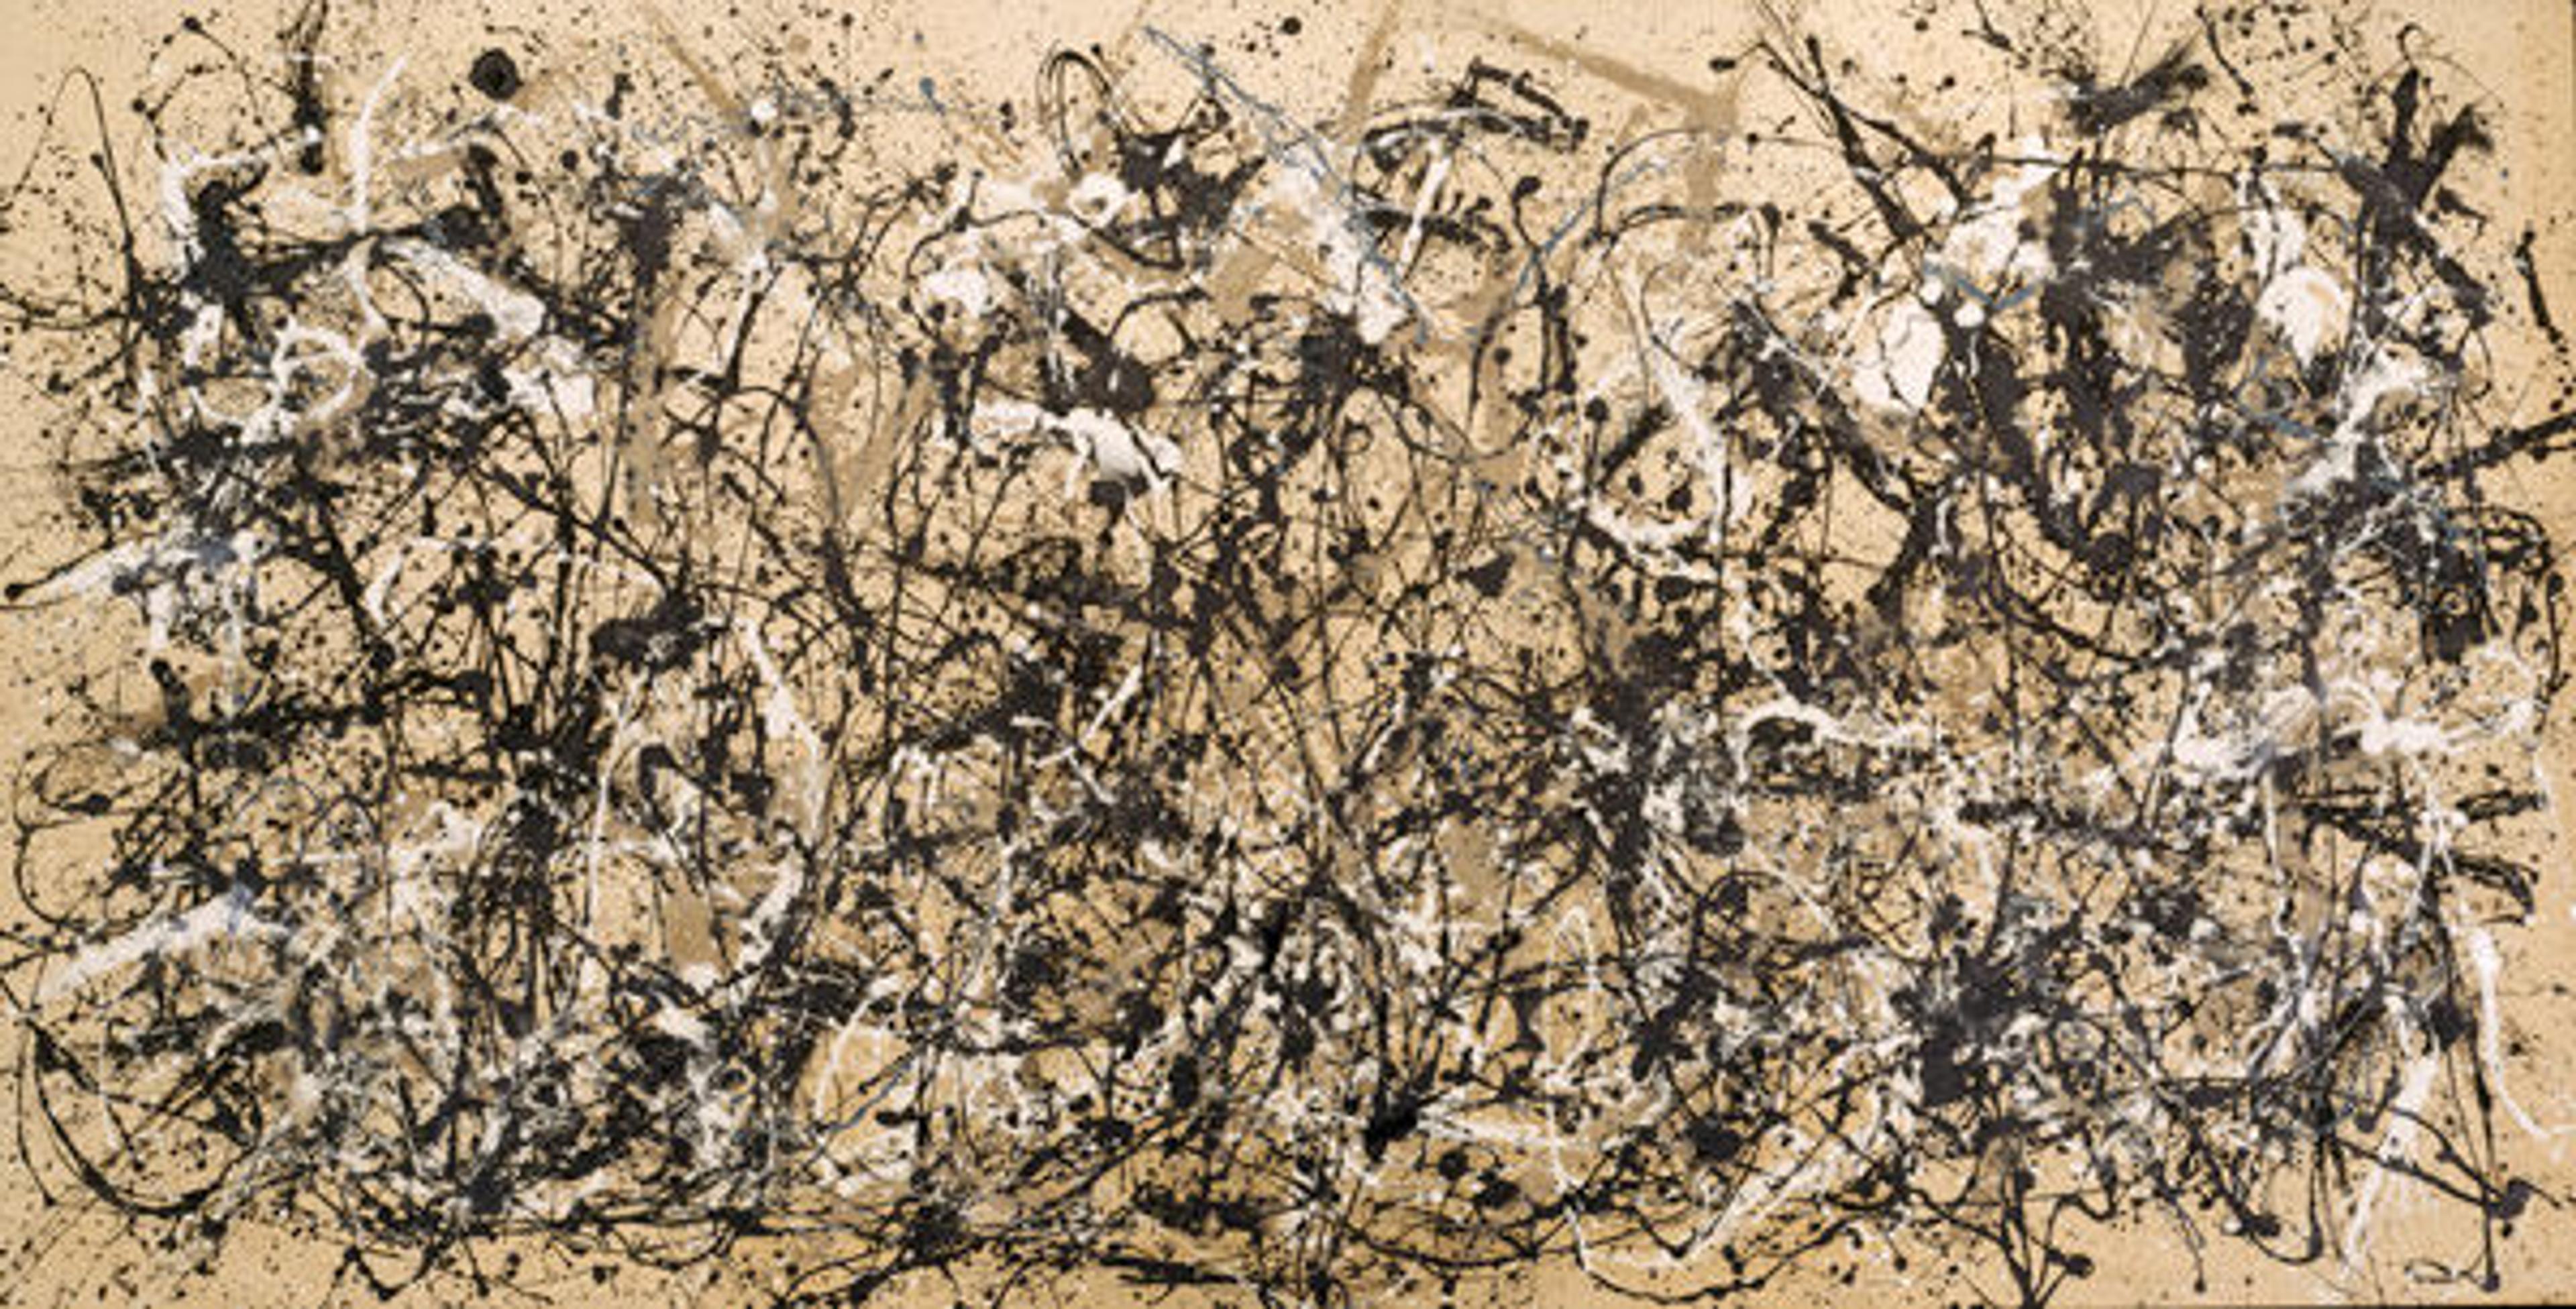 Jackson Pollock (American, 1912–1956) | Autumn Rhythm (Number 30), 1950 | 57.92